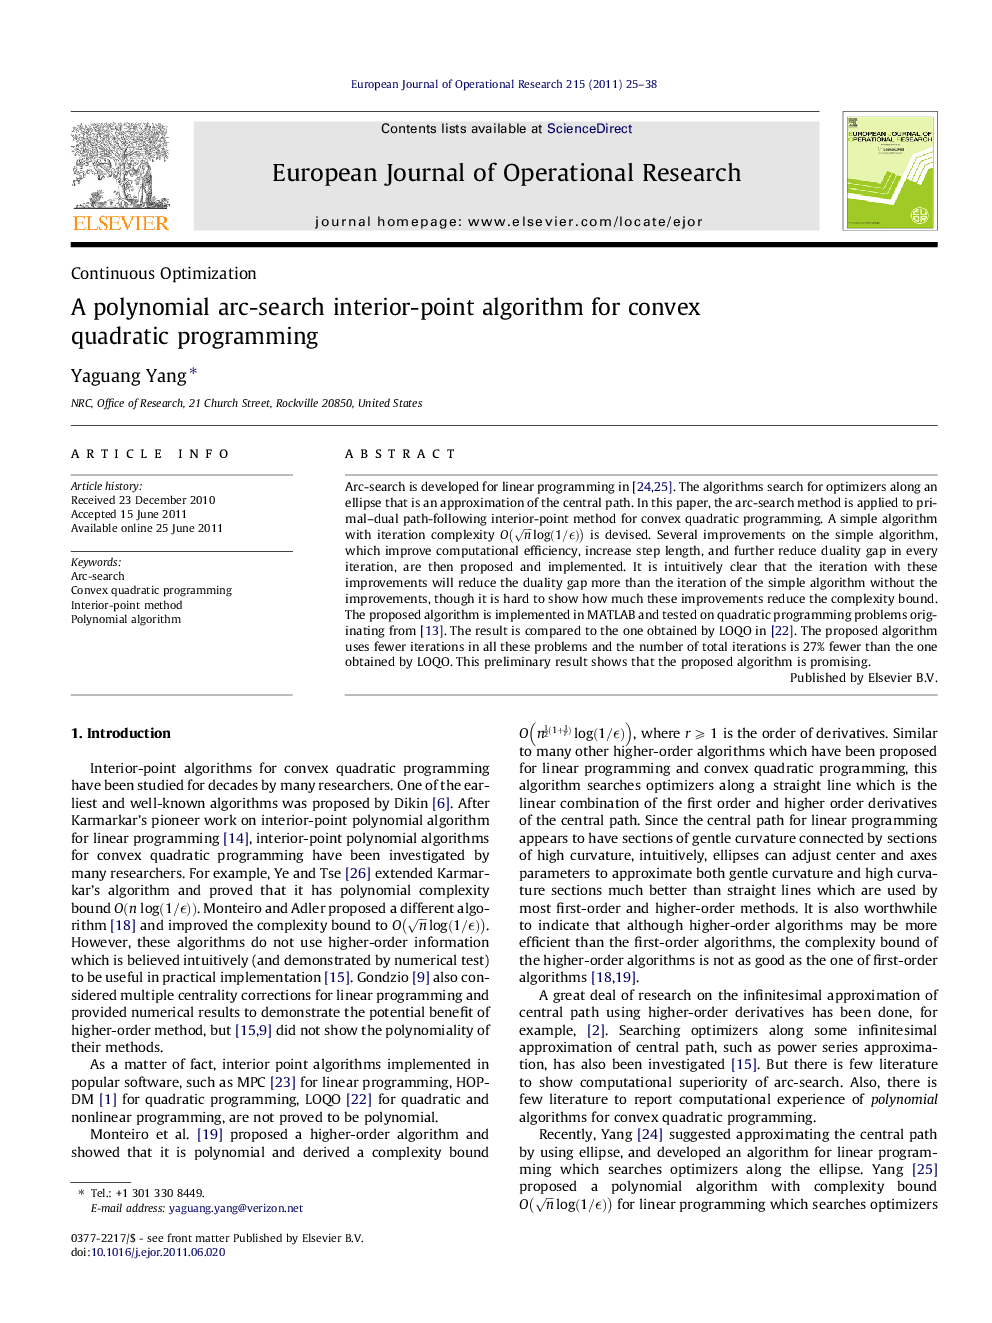 A polynomial arc-search interior-point algorithm for convex quadratic programming